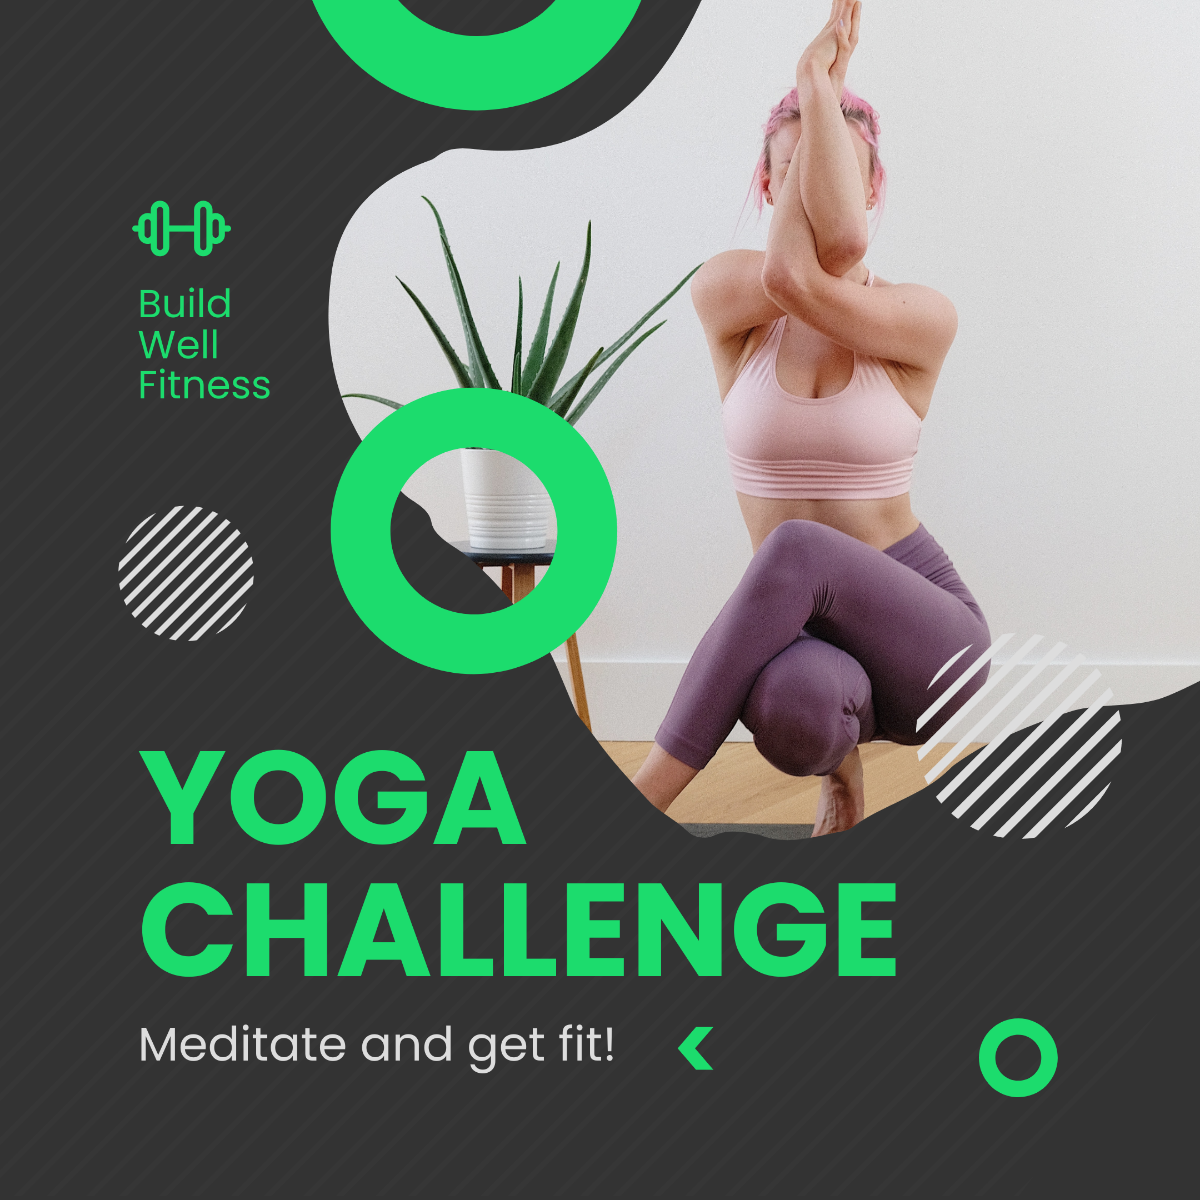 Yoga Challenge Post, Instagram, Facebook Template